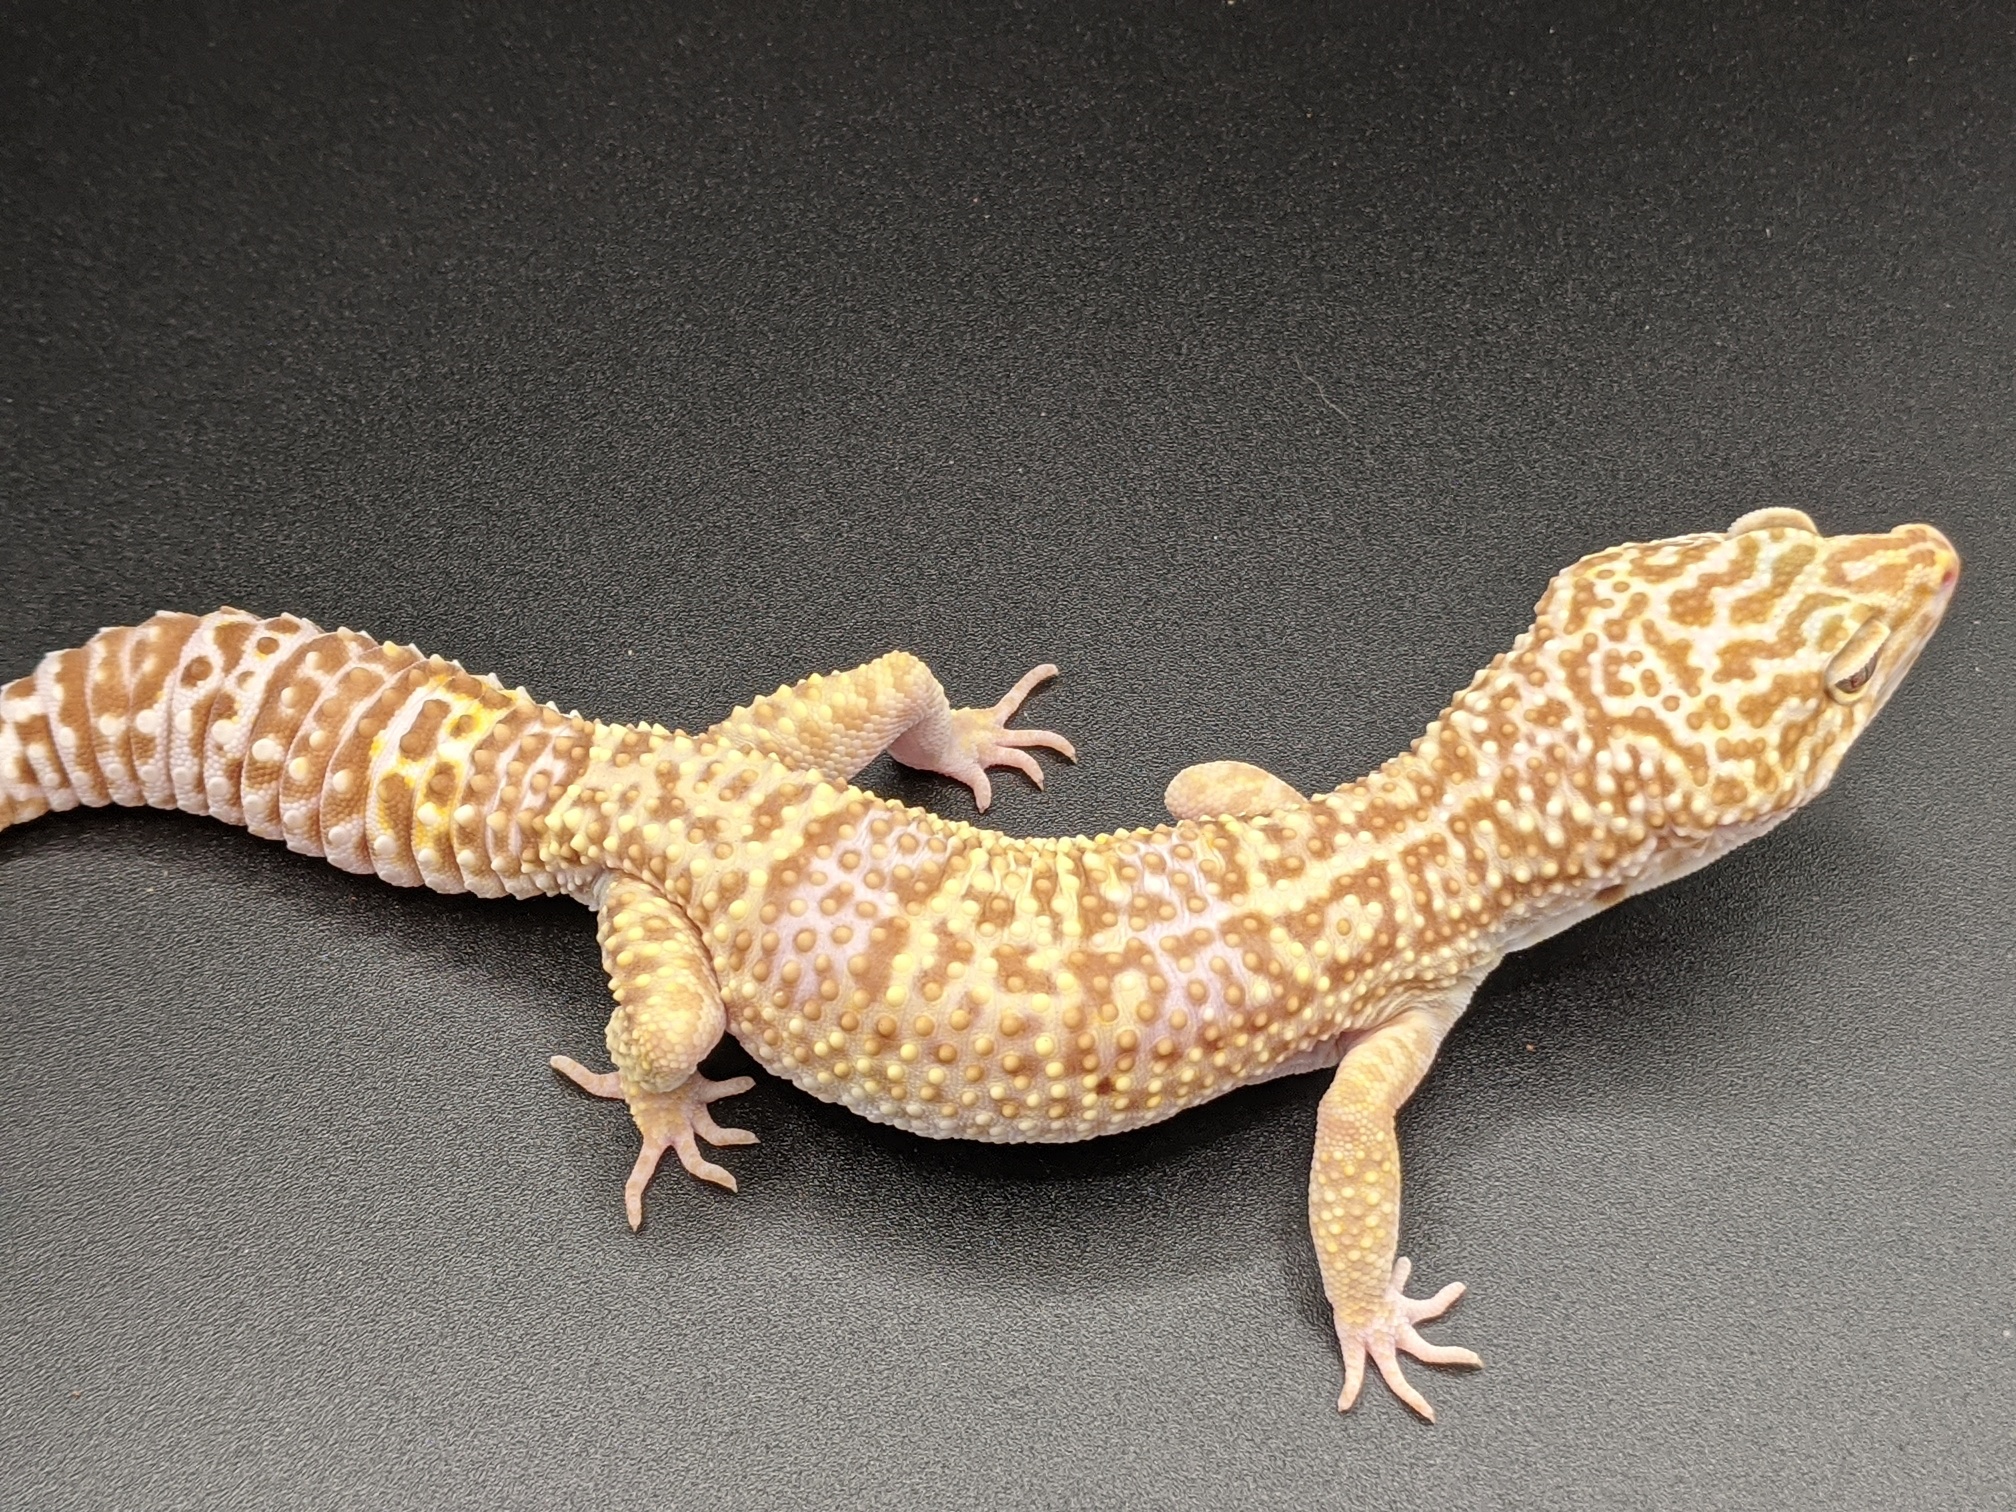 Tremper Leopard Gecko by Hooked on Geckos